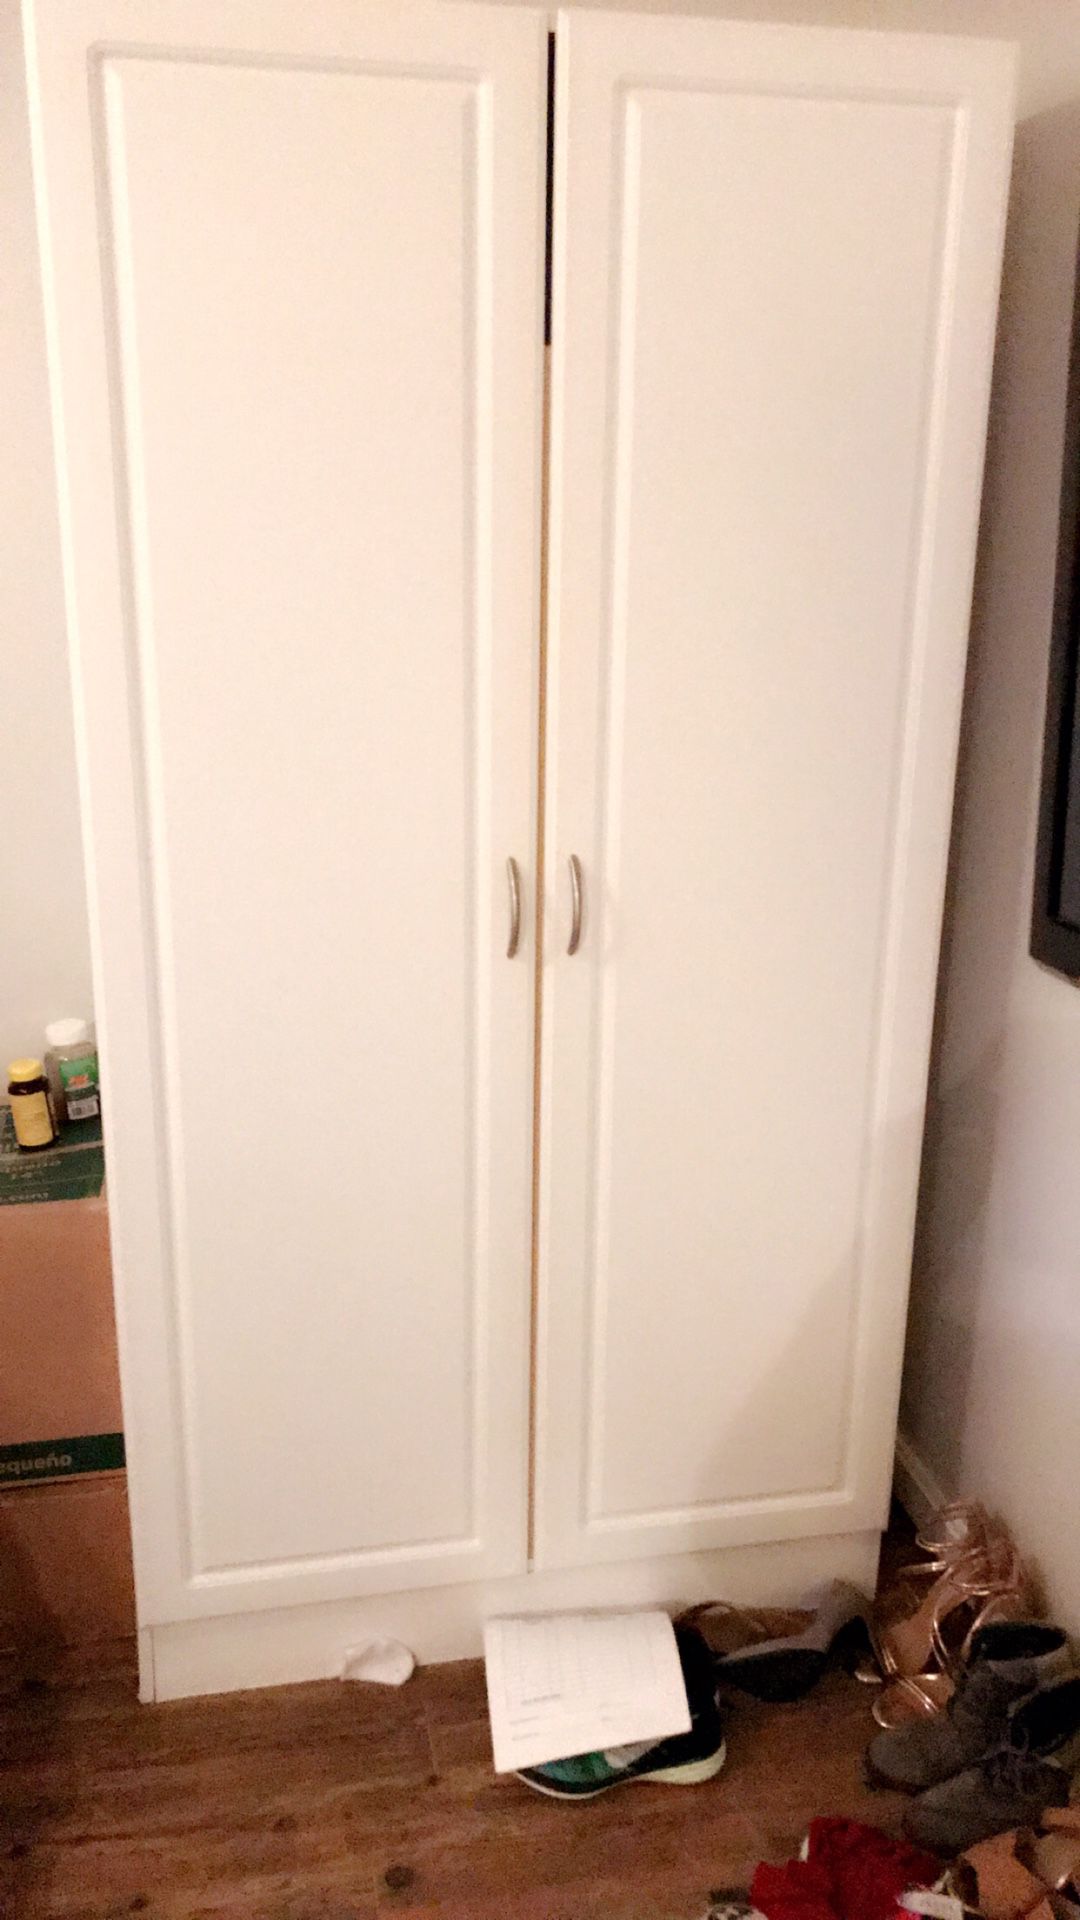 2 Ikea armoires/ dressers